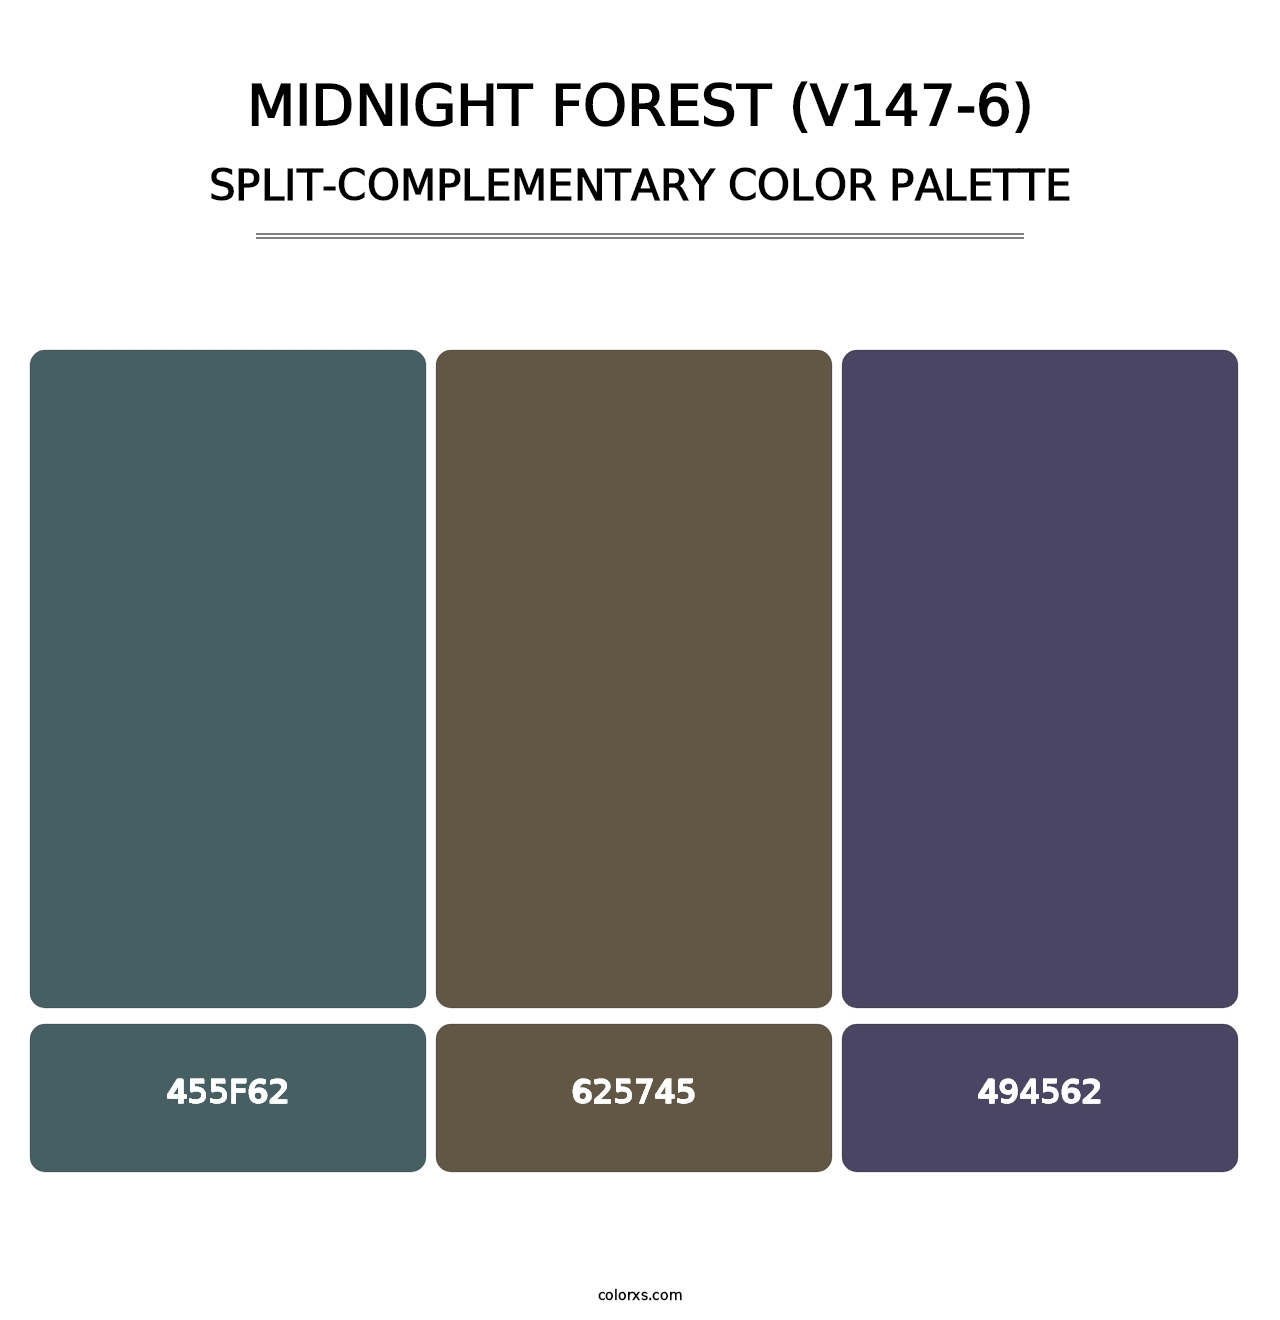 Midnight Forest (V147-6) - Split-Complementary Color Palette